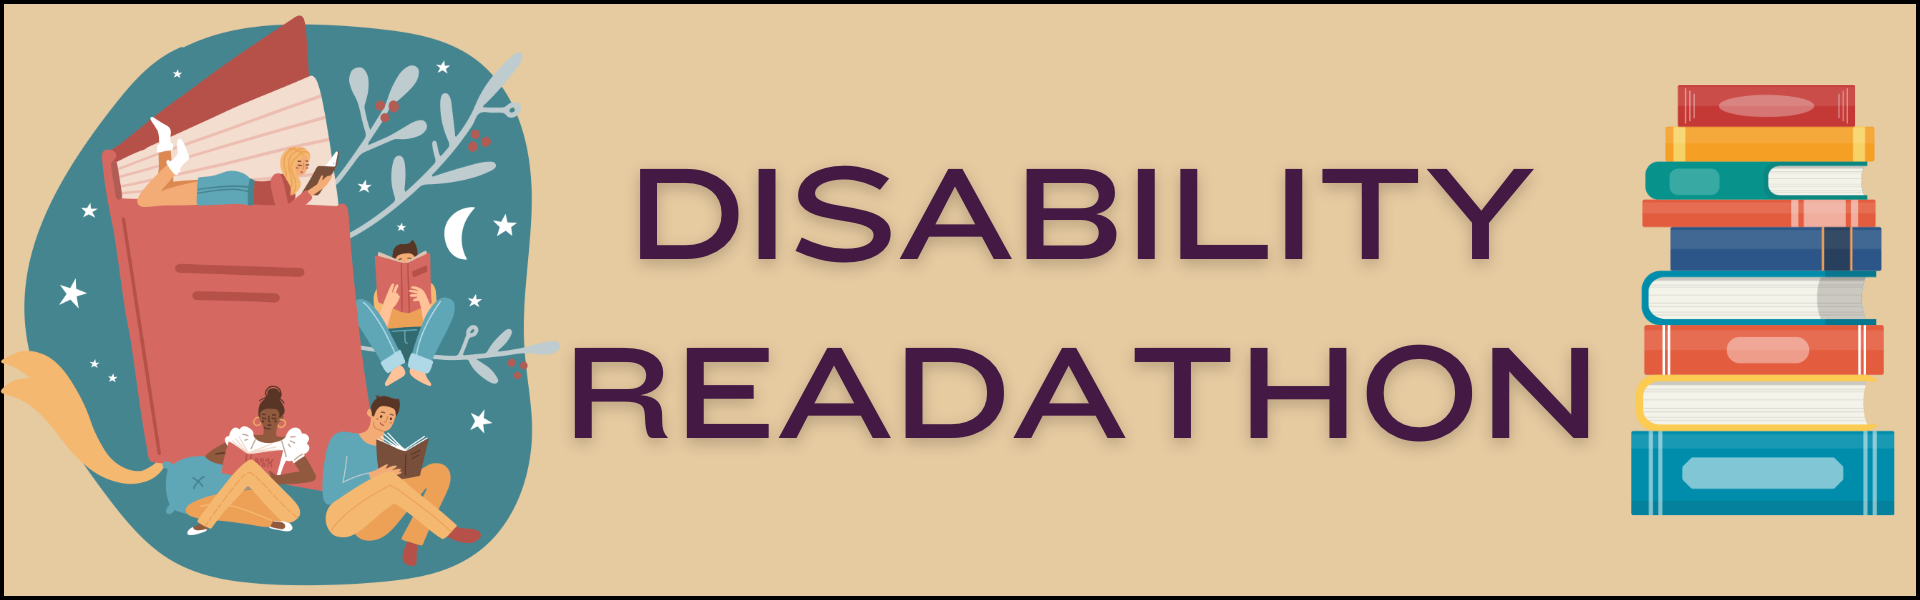 Disability Readathon banner image